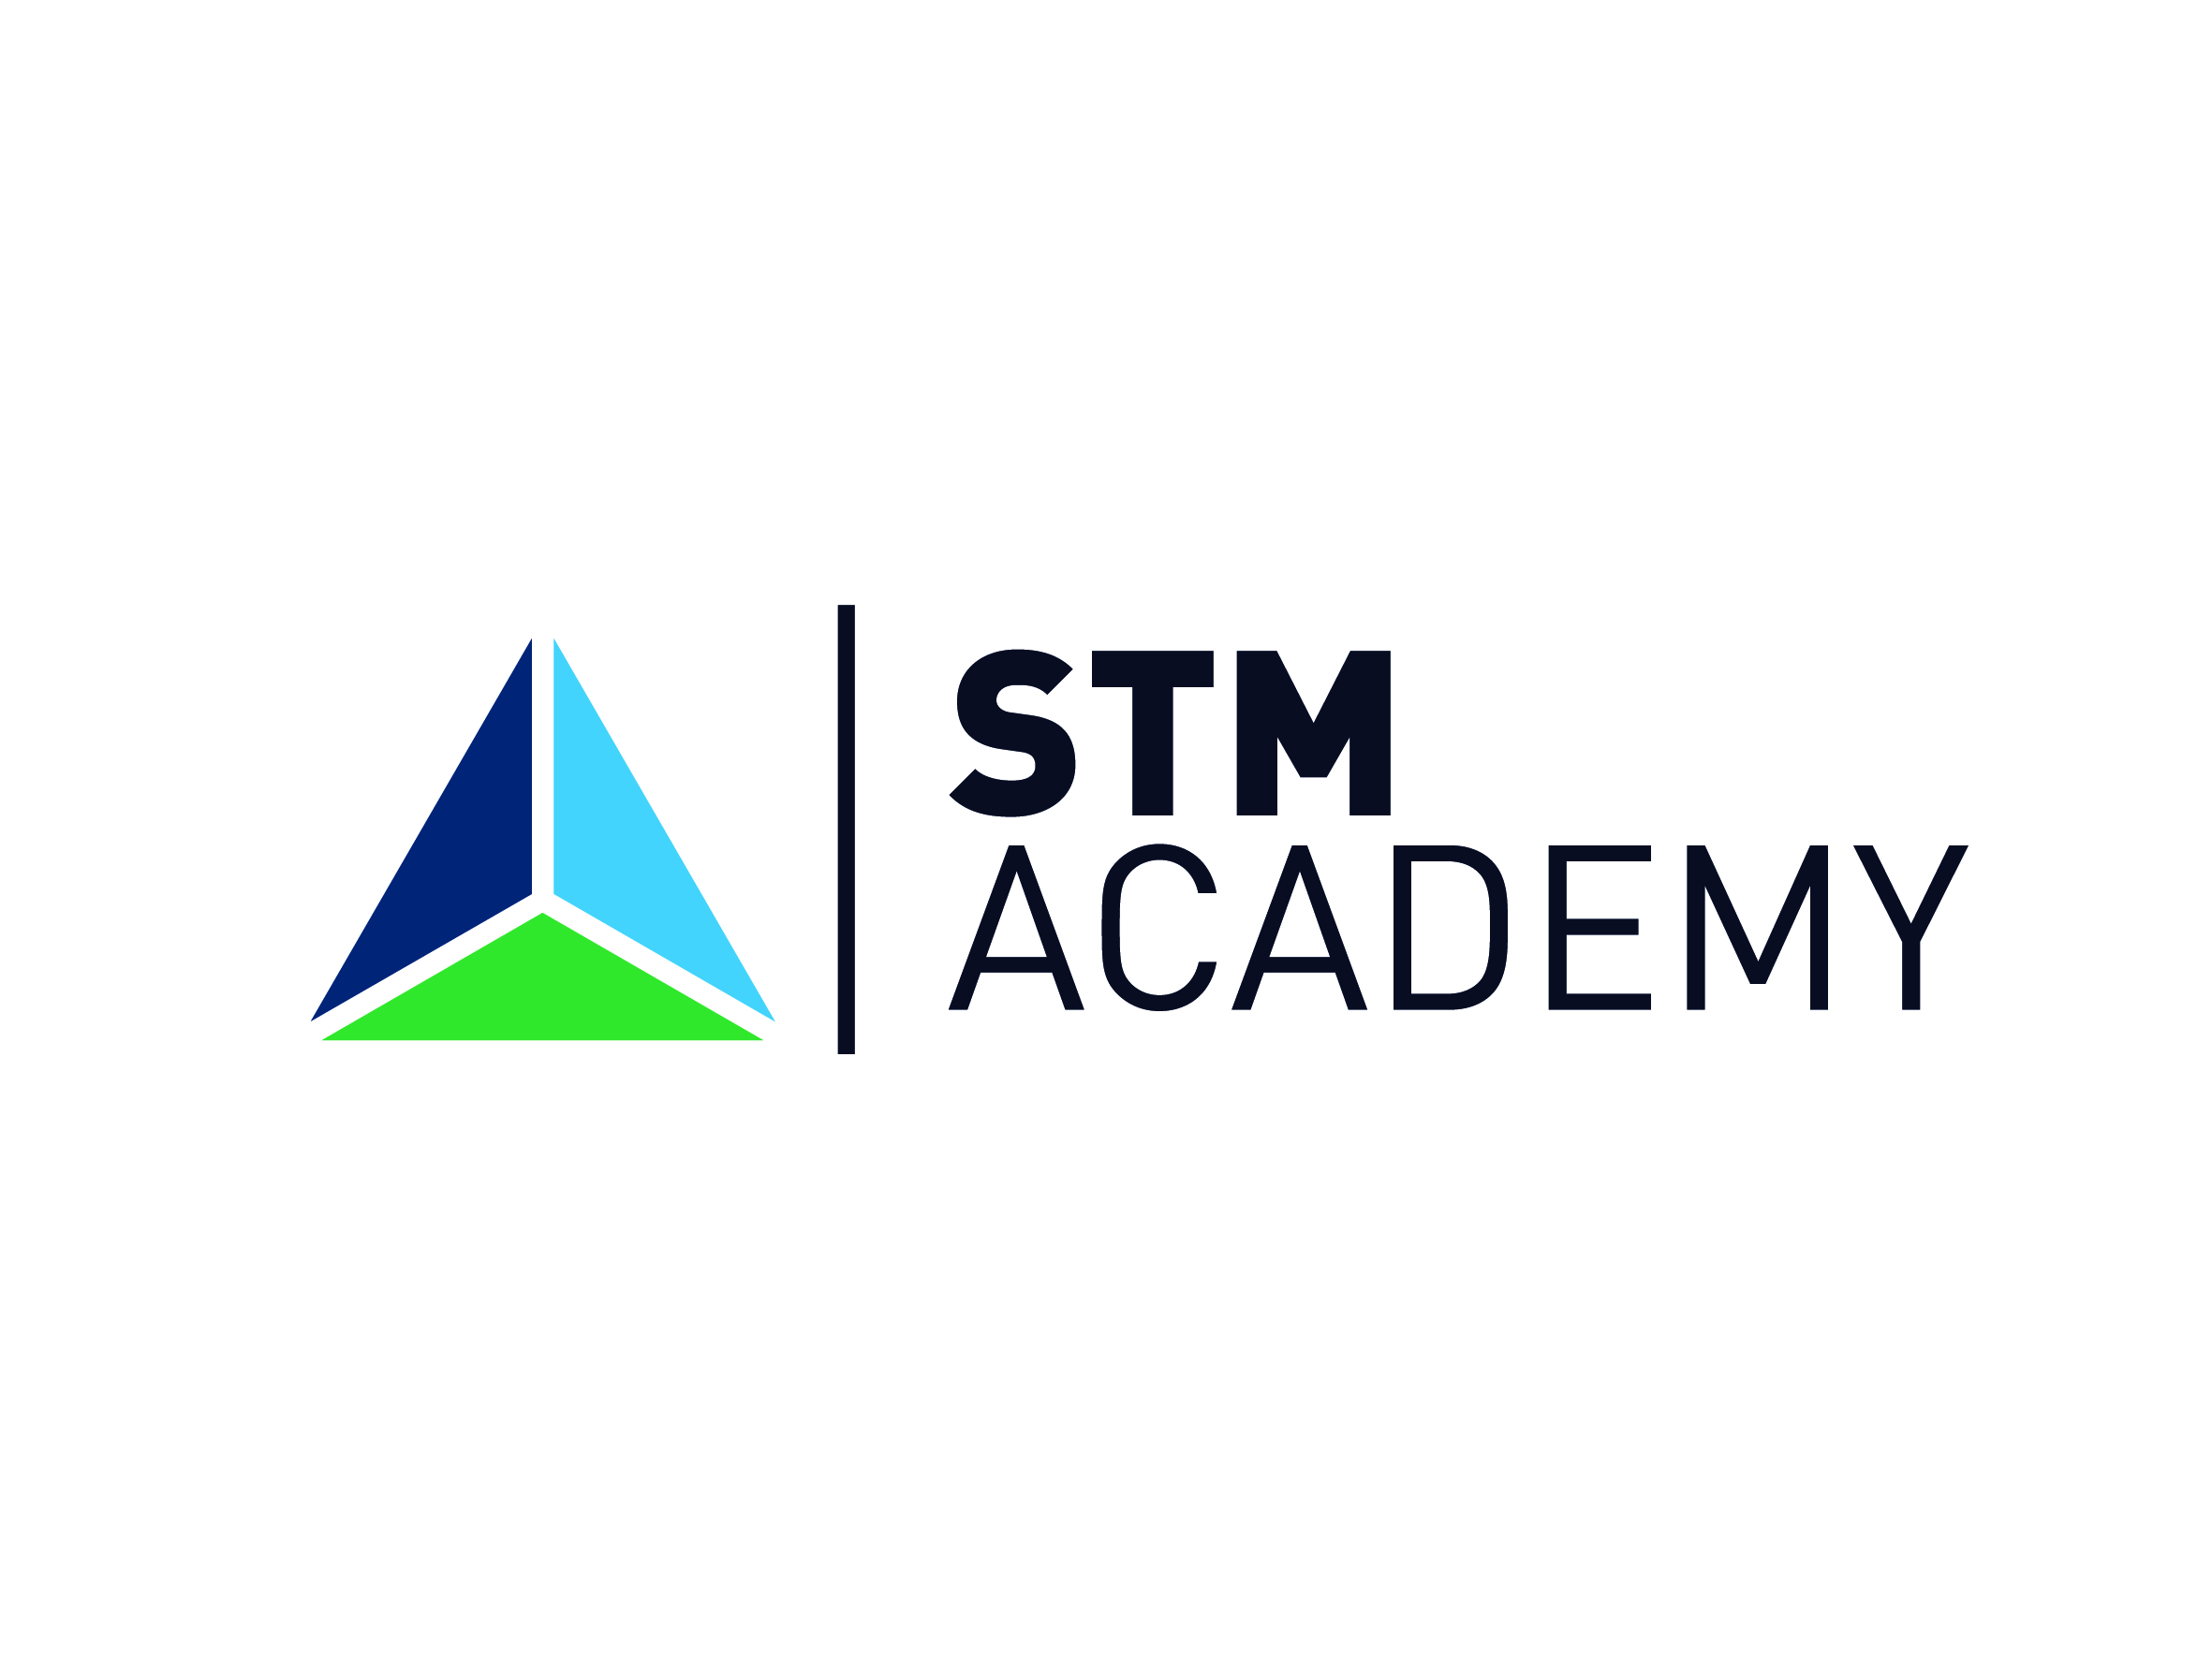 STM ACADEMY Logotype ENG 01 020118 01